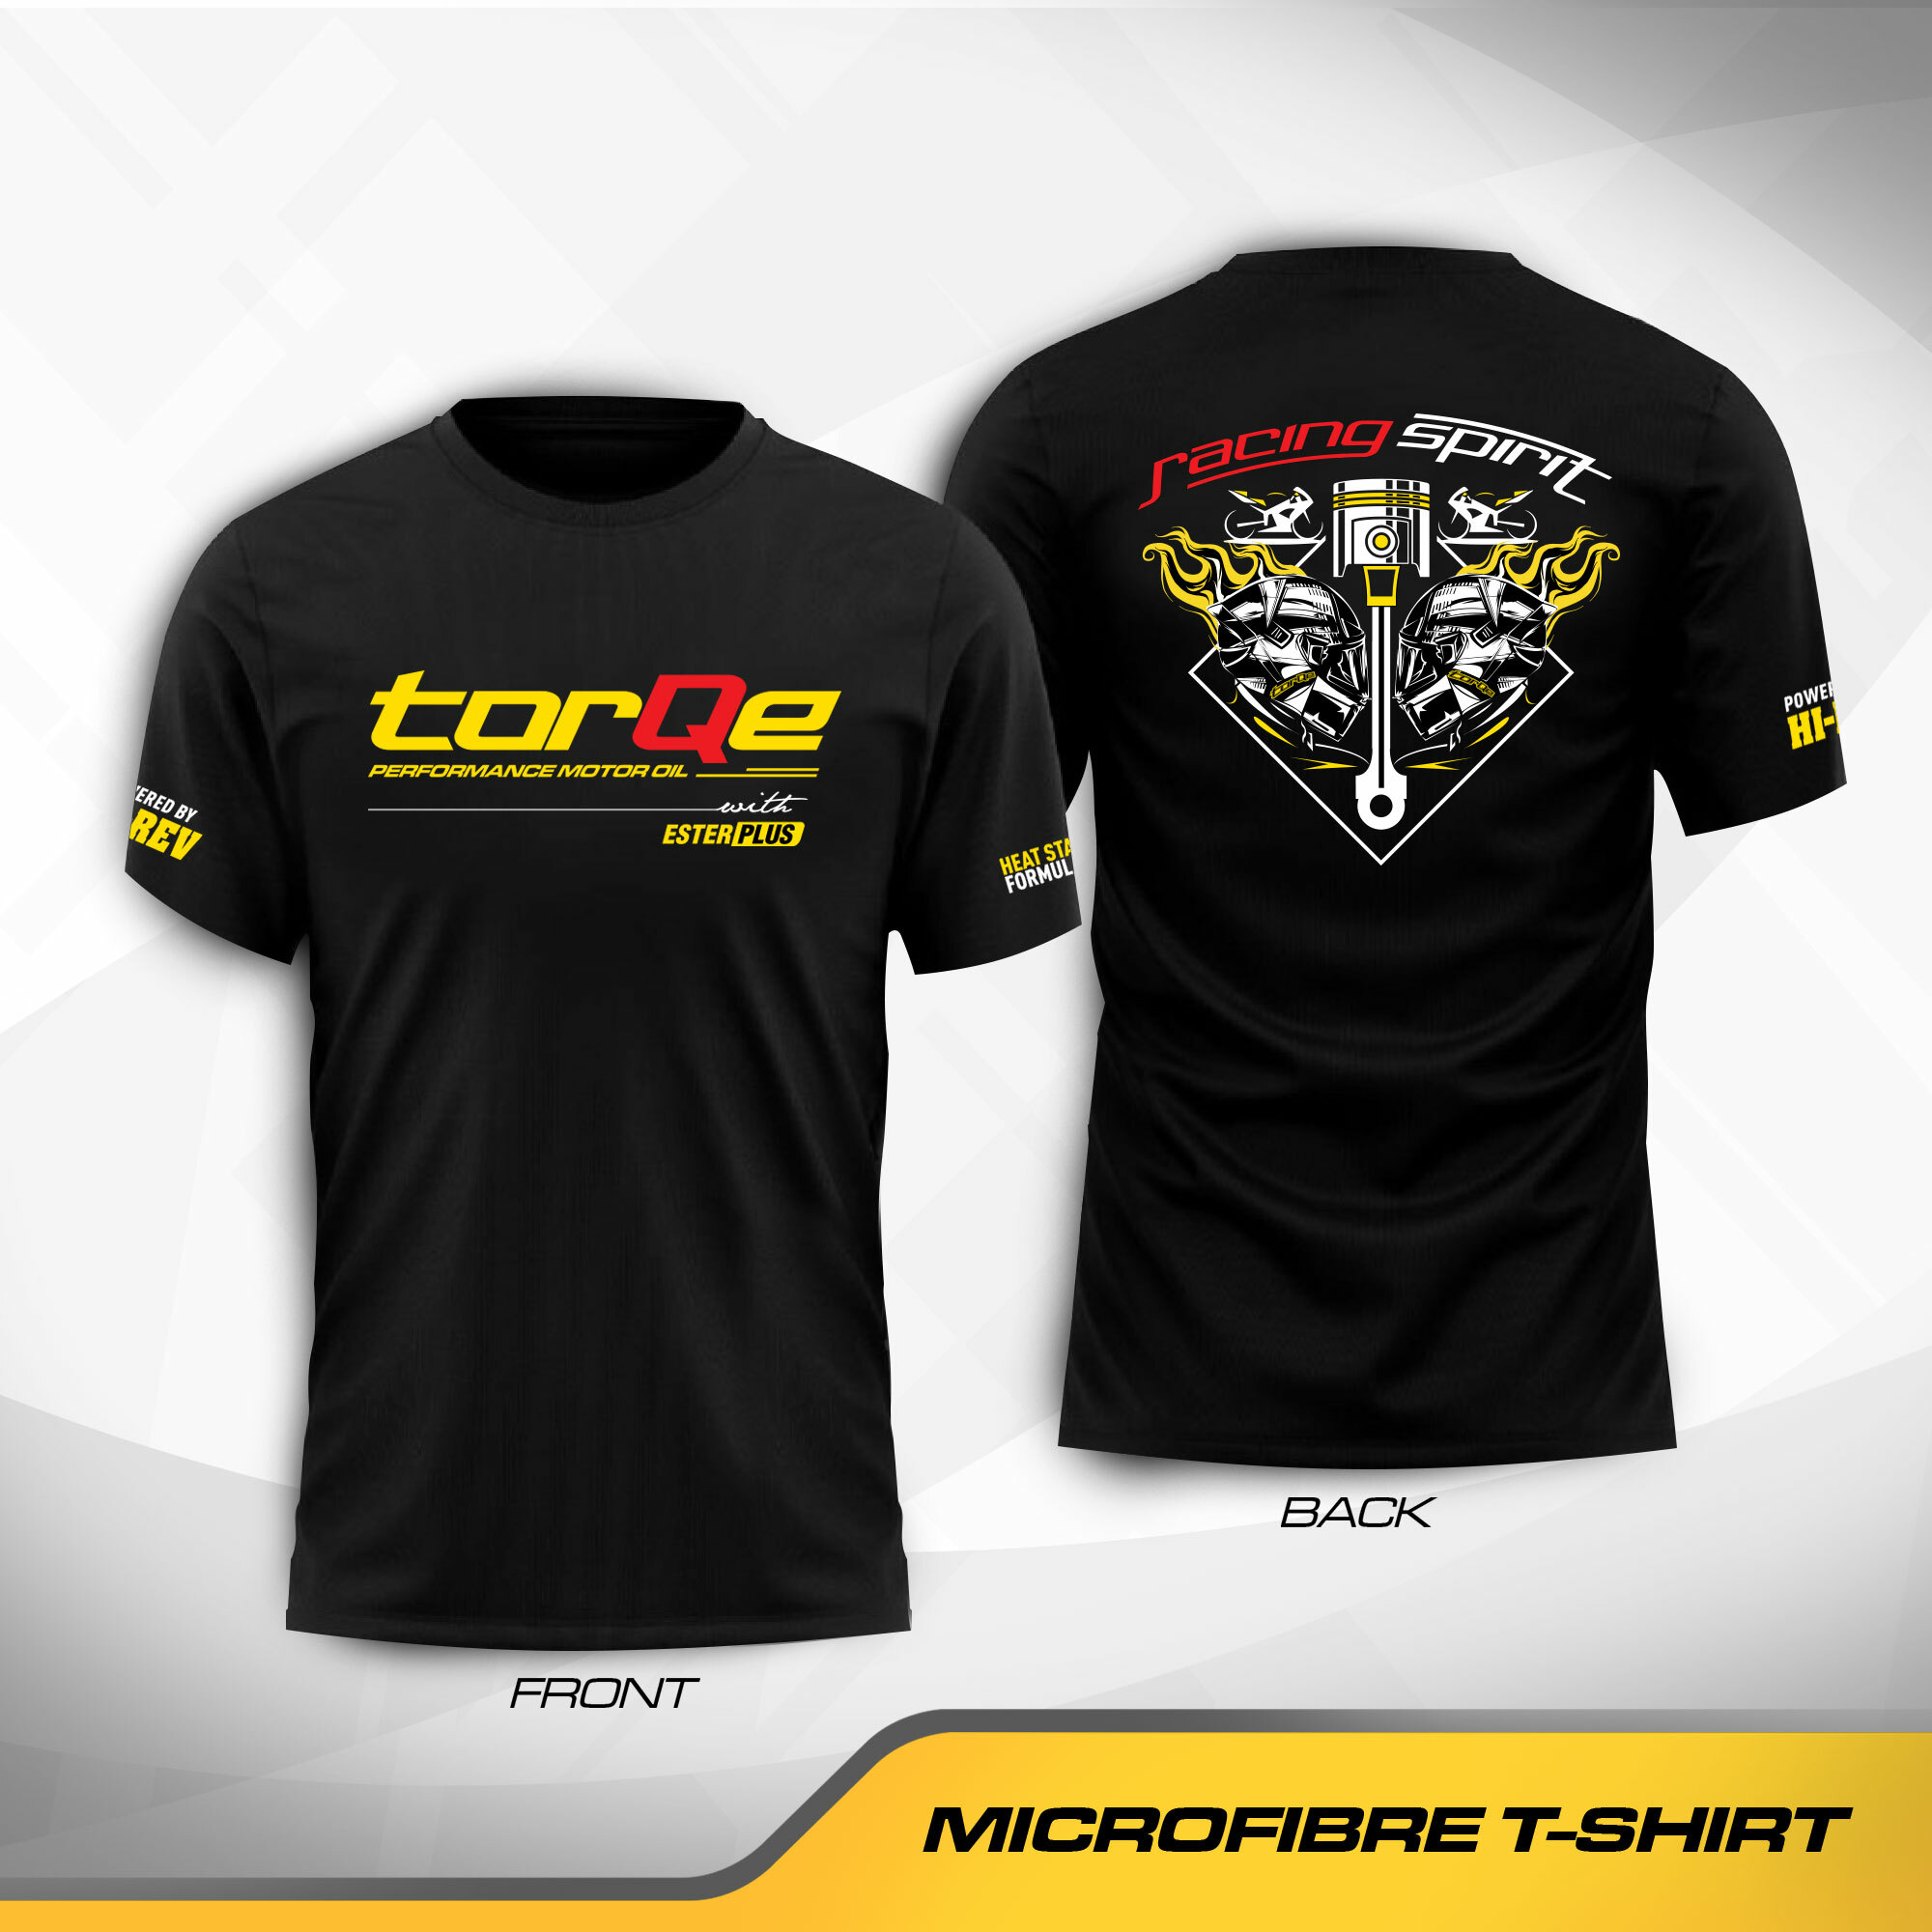 TorQe 2W Microfiber T-shirt - New Release! – HI-REV Junction E-Store